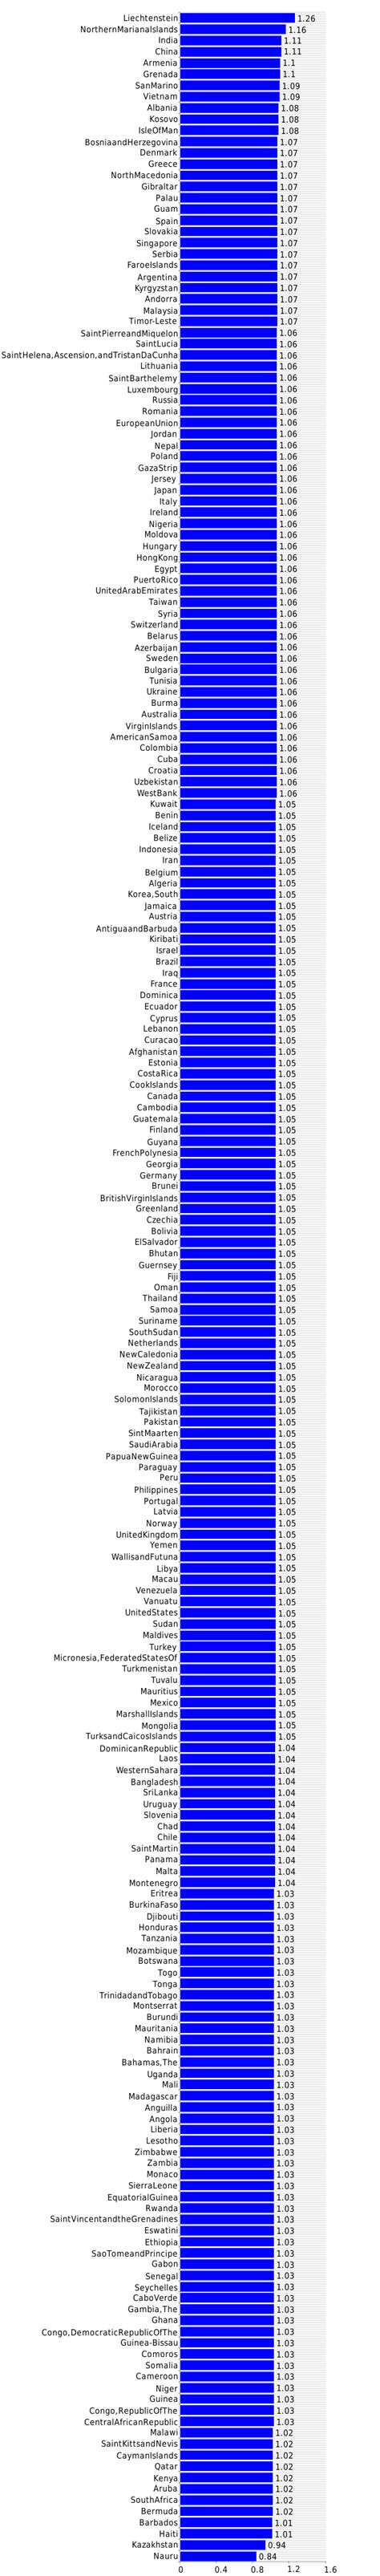 Graph Of Sex Ratio At Birth Malesfemale 2020 Country Comparisons